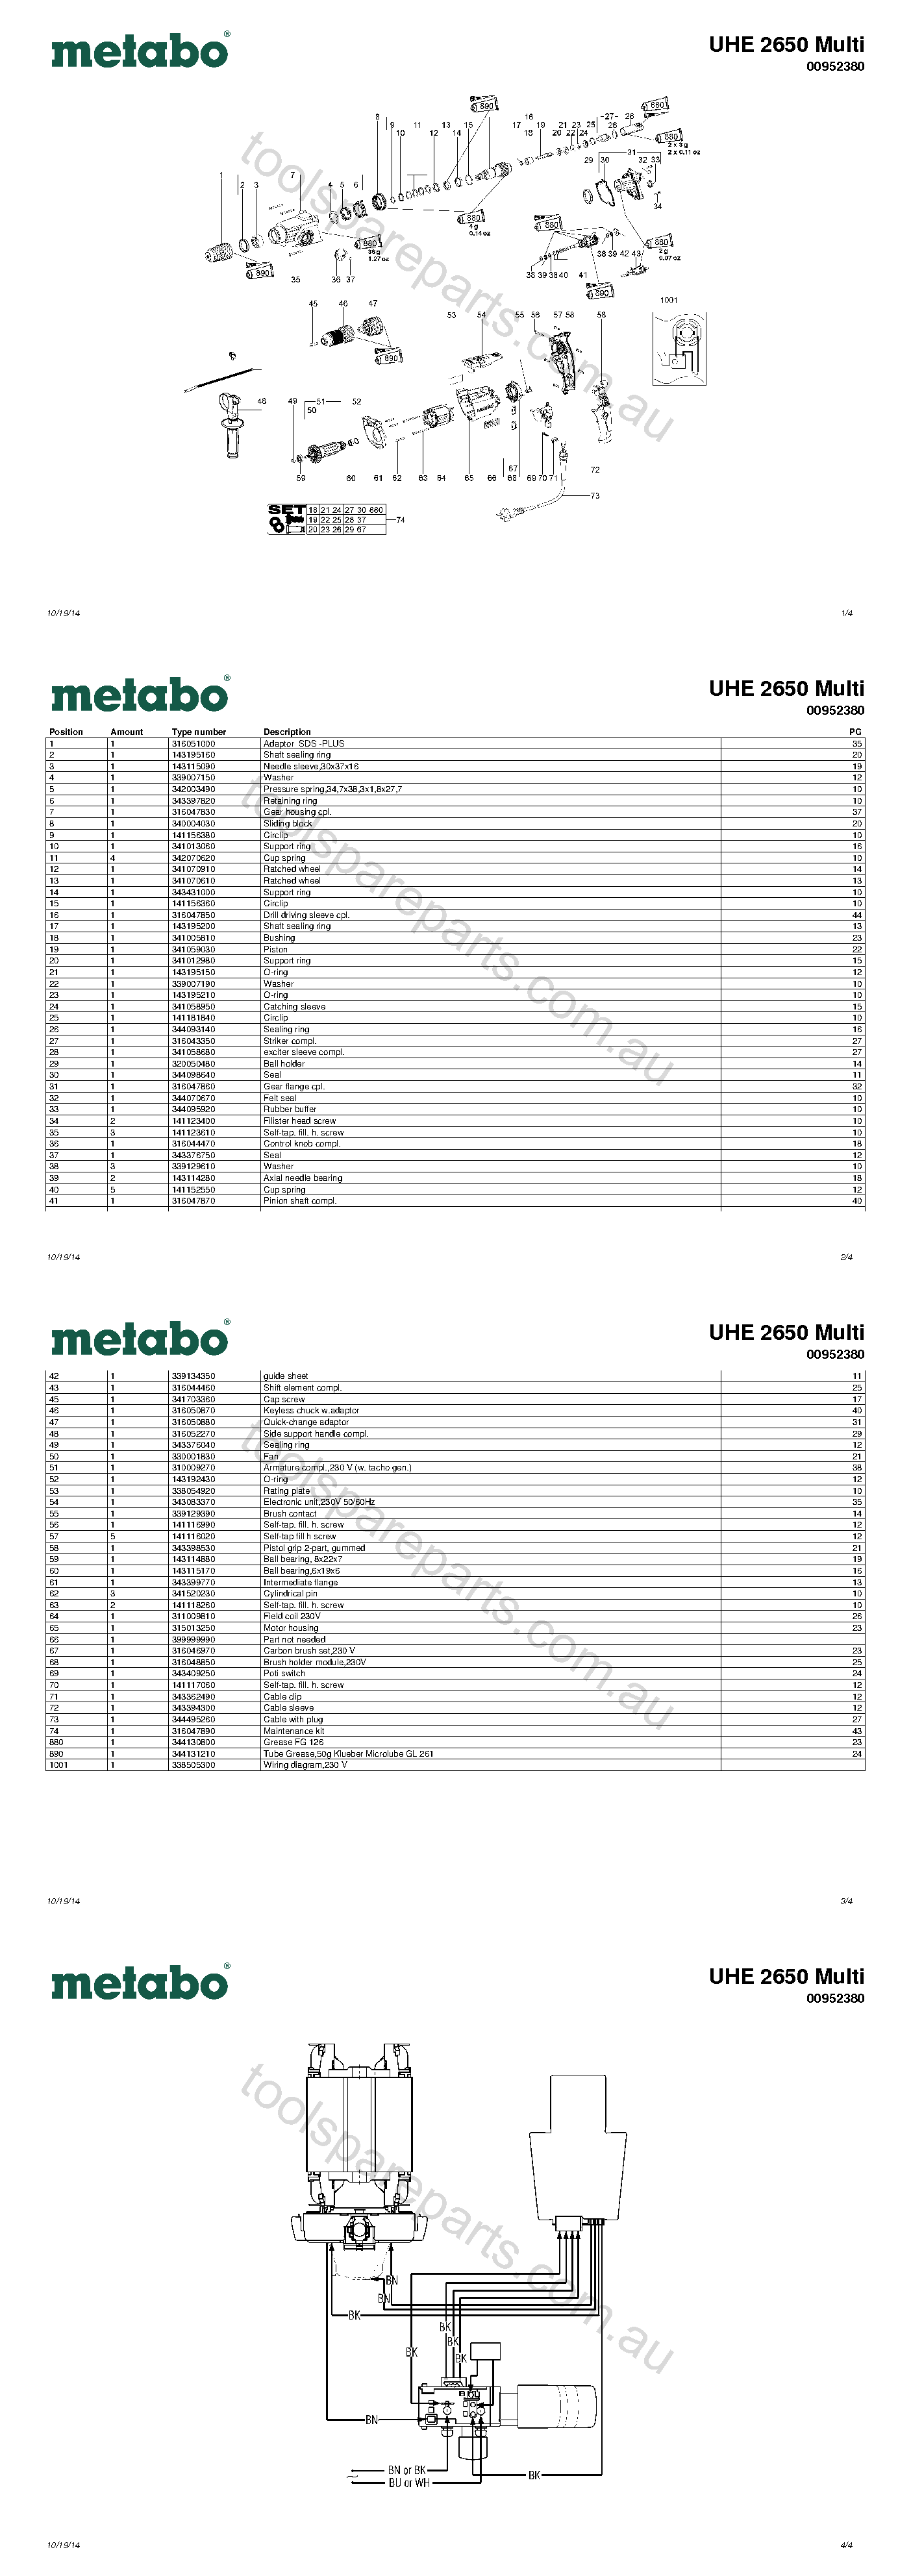 Metabo UHE 2650 Multi 00952380  Diagram 1